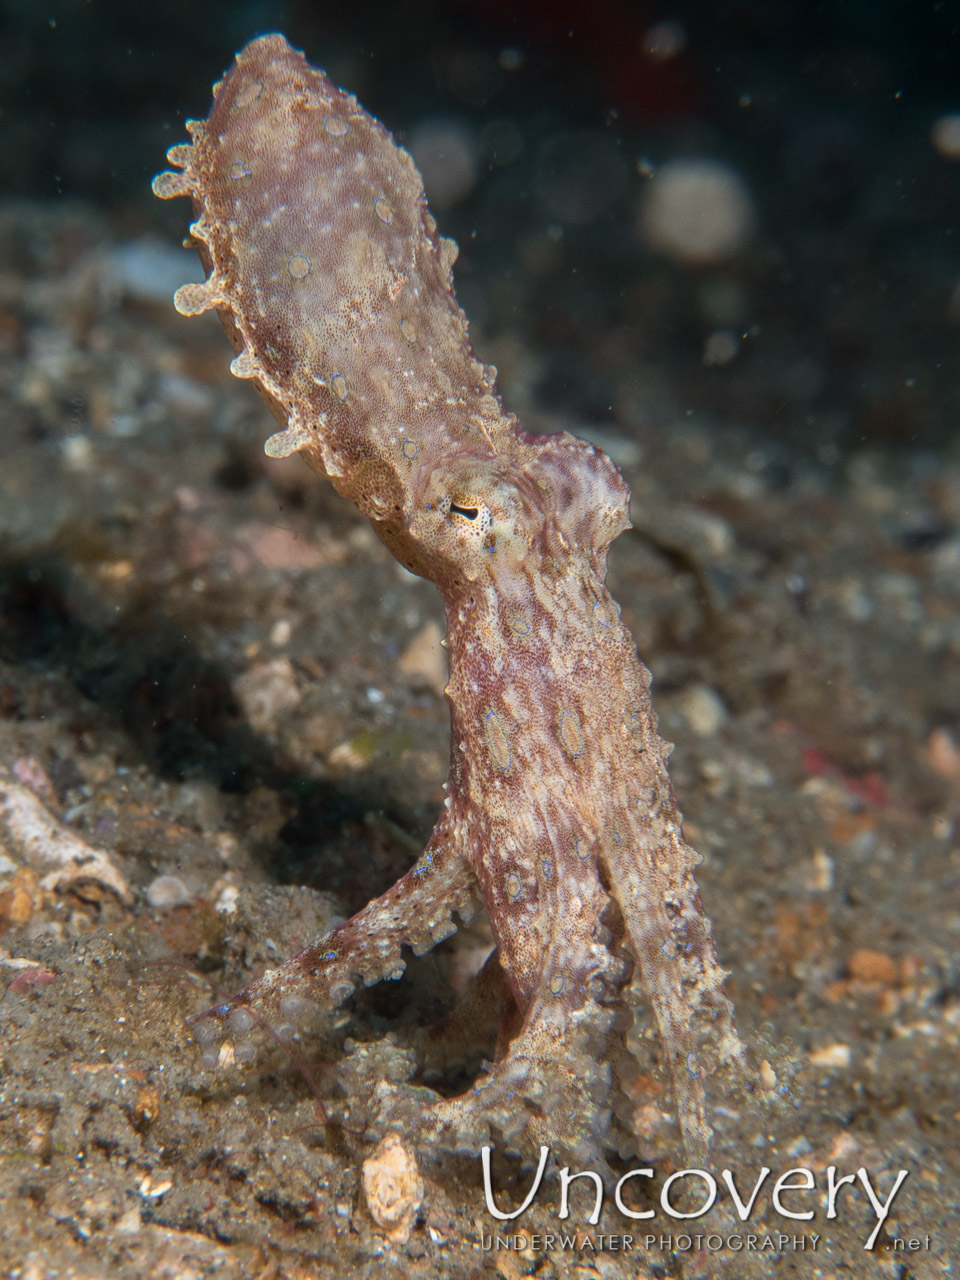 Blue Ring Octopus (hapalochlaena Lunulata), photo taken in Indonesia, North Sulawesi, Lembeh Strait, Pintu Colada 1